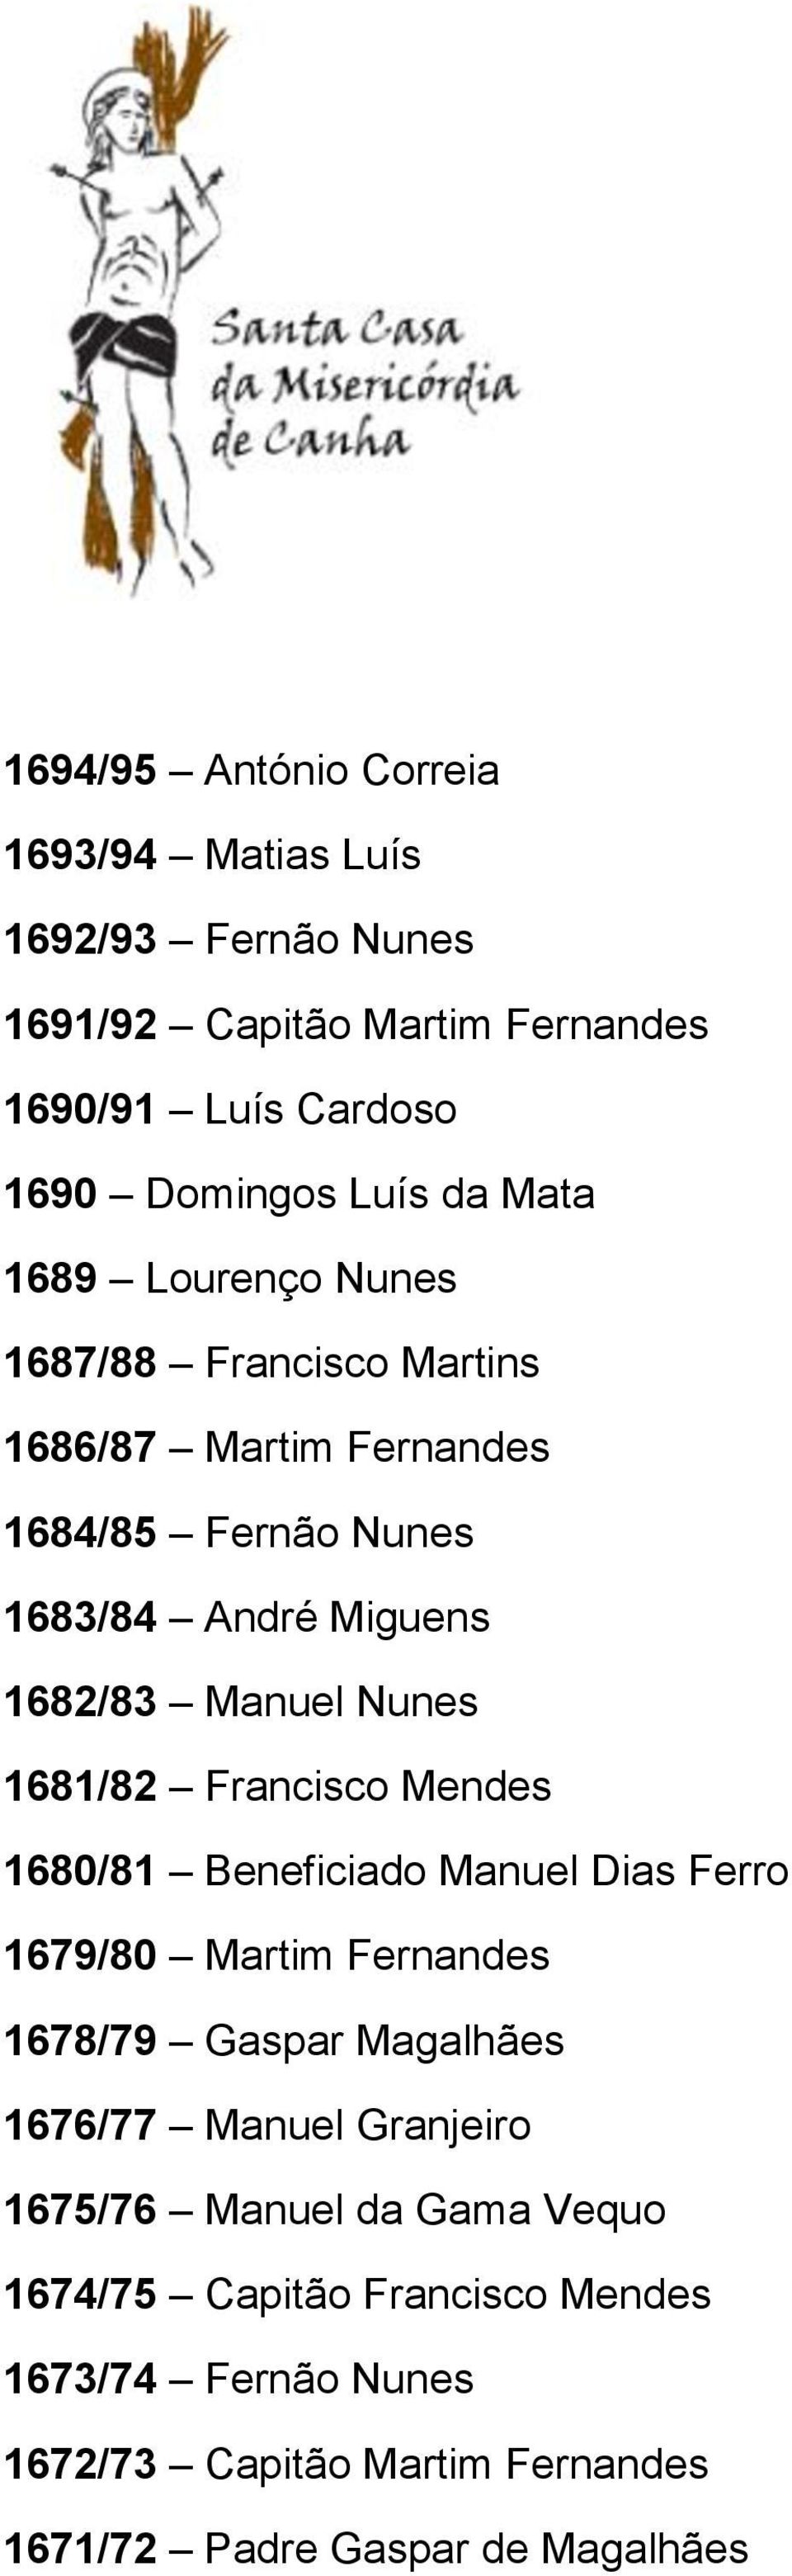 1681/82 Francisco Mendes 1680/81 Beneficiado Manuel Dias Ferro 1679/80 Martim Fernandes 1678/79 Gaspar Magalhães 1676/77 Manuel Granjeiro